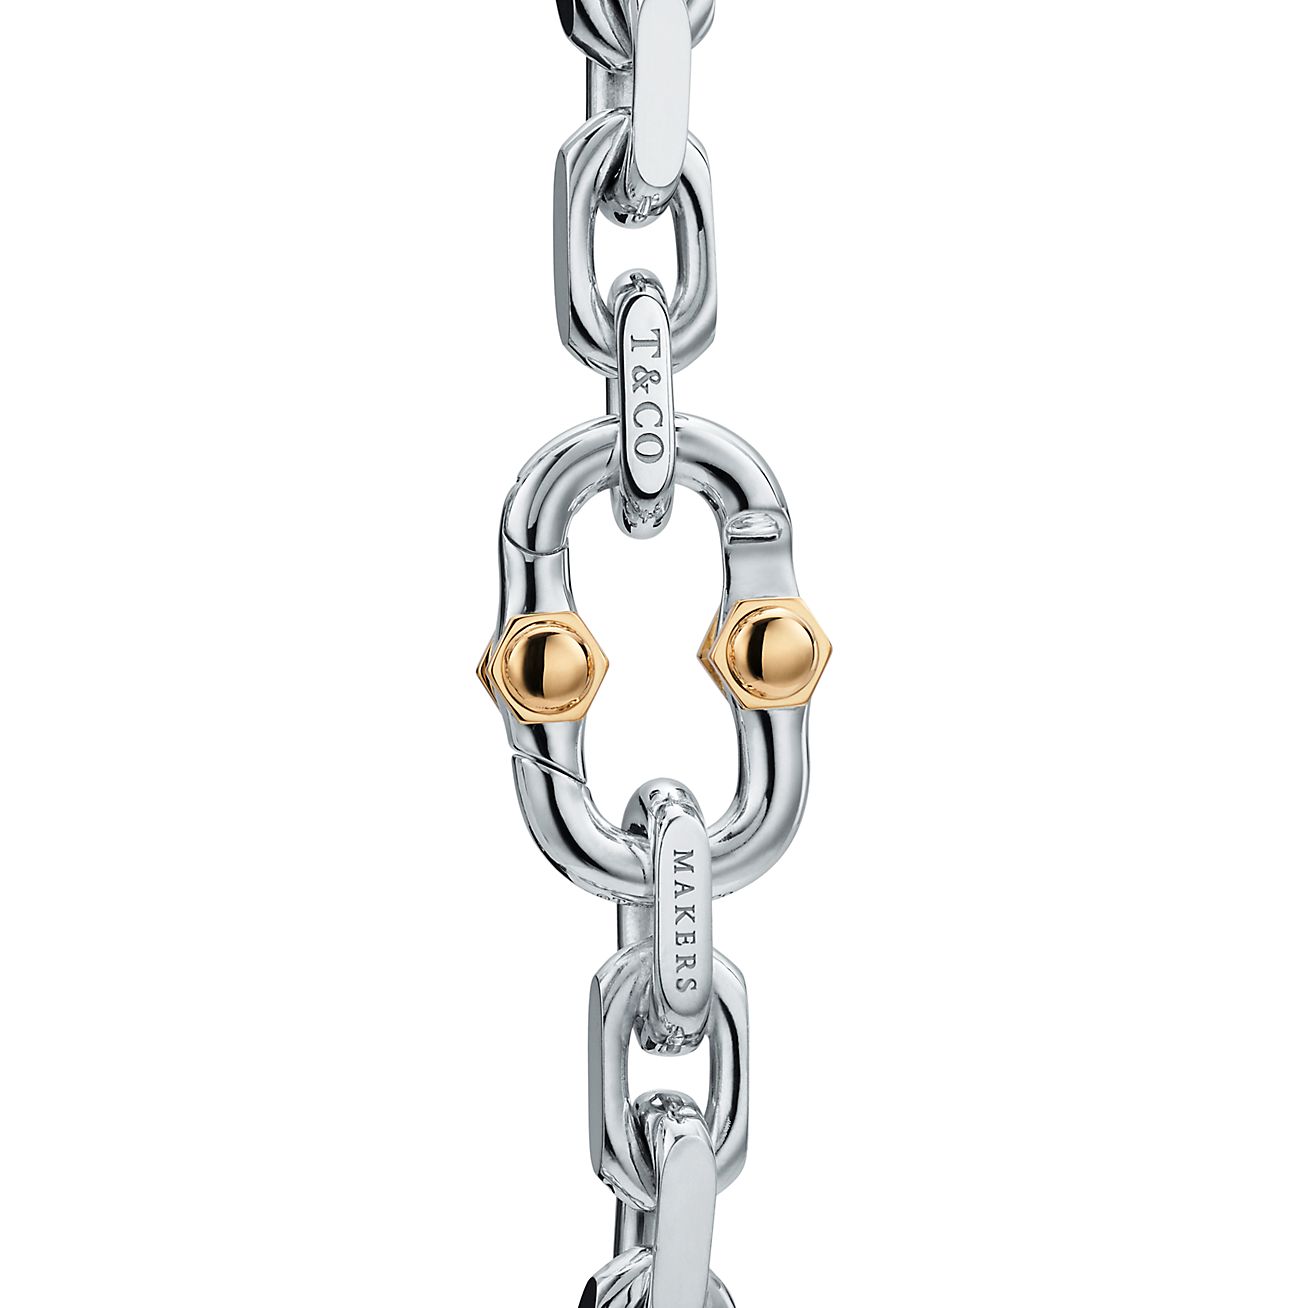 Tiffany 1837 Makers ID Chain Bracelet